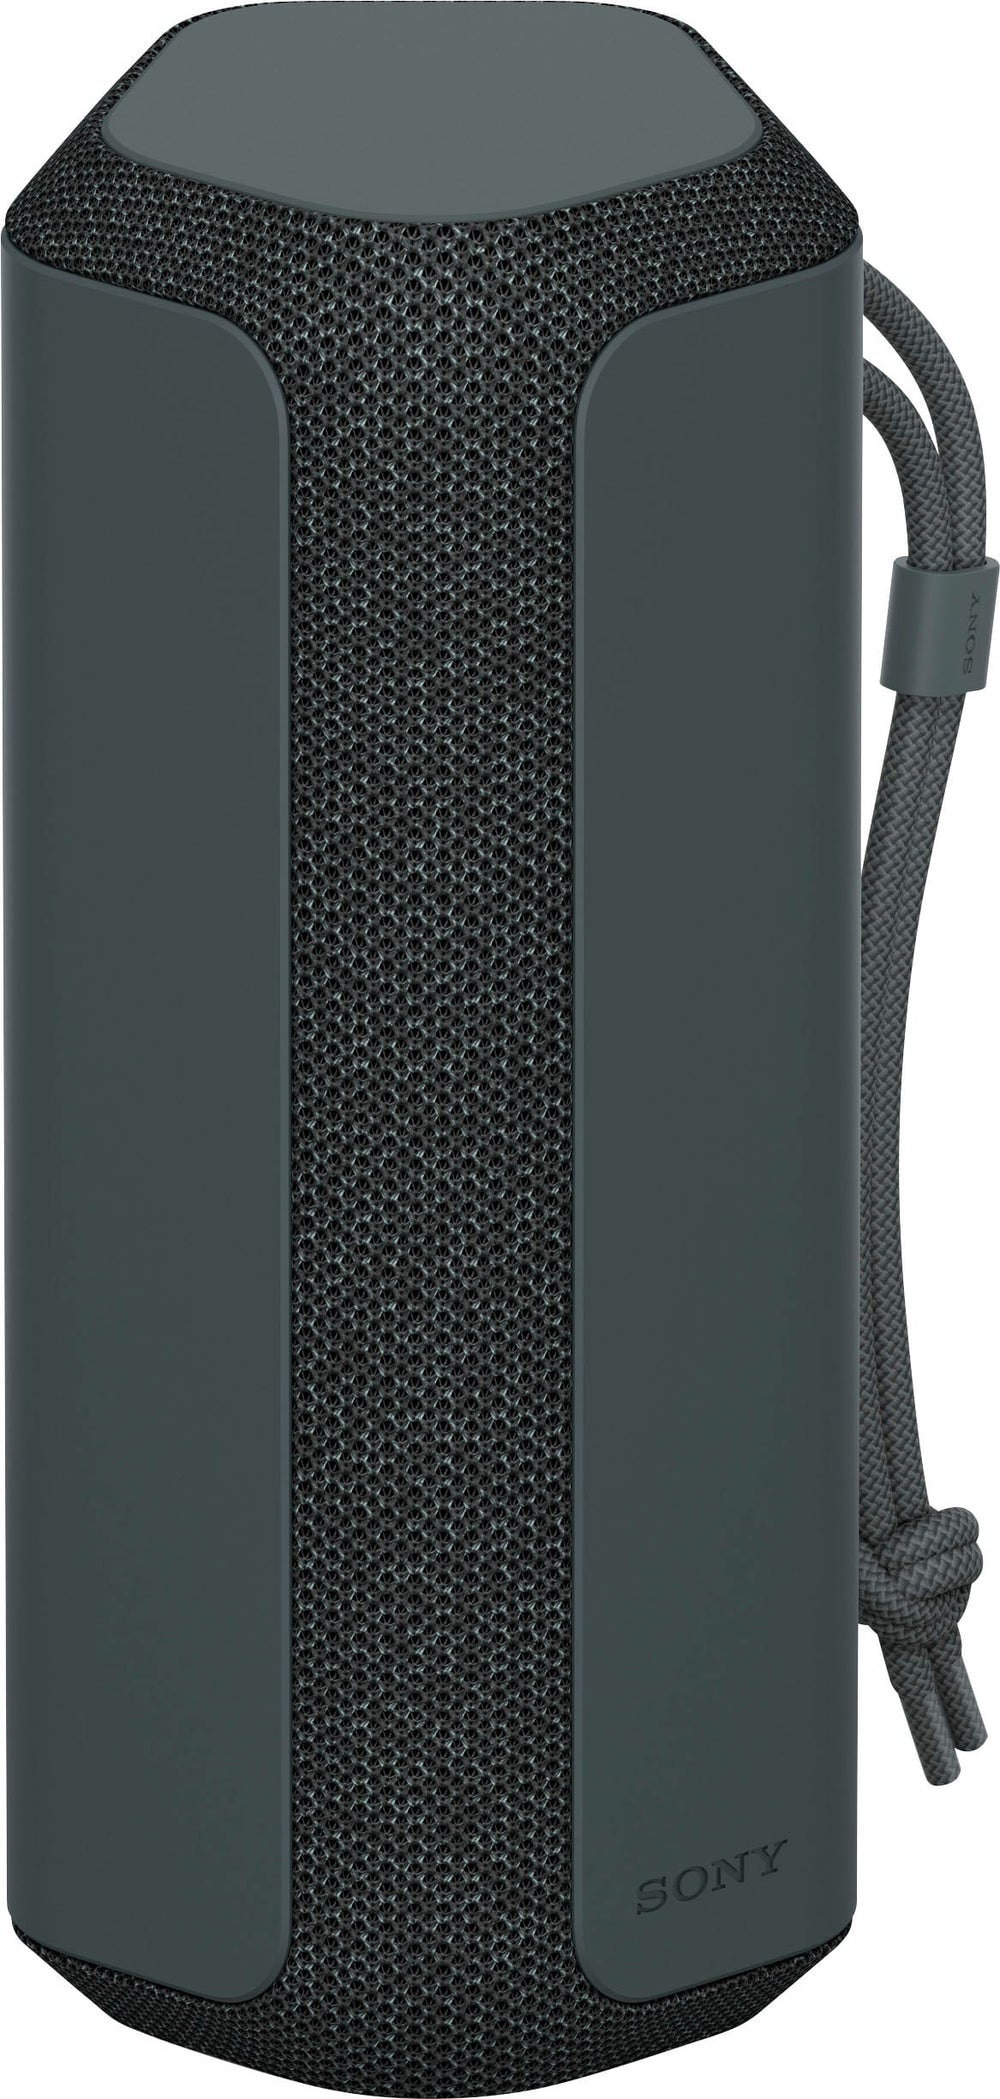 Sony - SRSXE200 Portable X-Series Bluetooth Speaker - Black_1